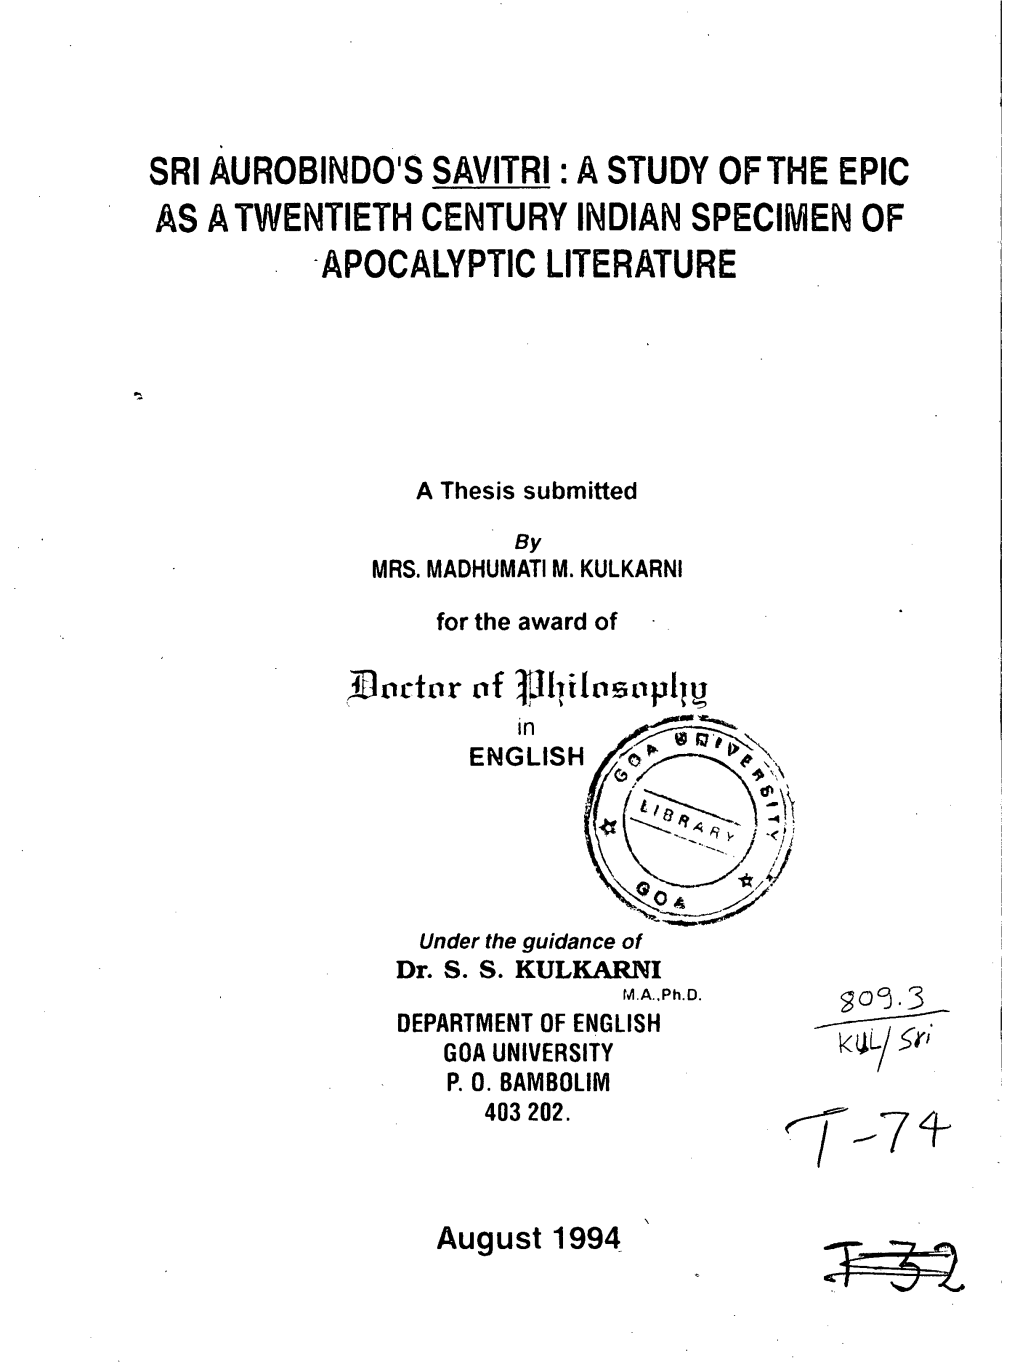 Sri Aurobindo's Savitri : a Study of the Epic As a Twentieth Century Indian Specimen of Apocalyptic Literature